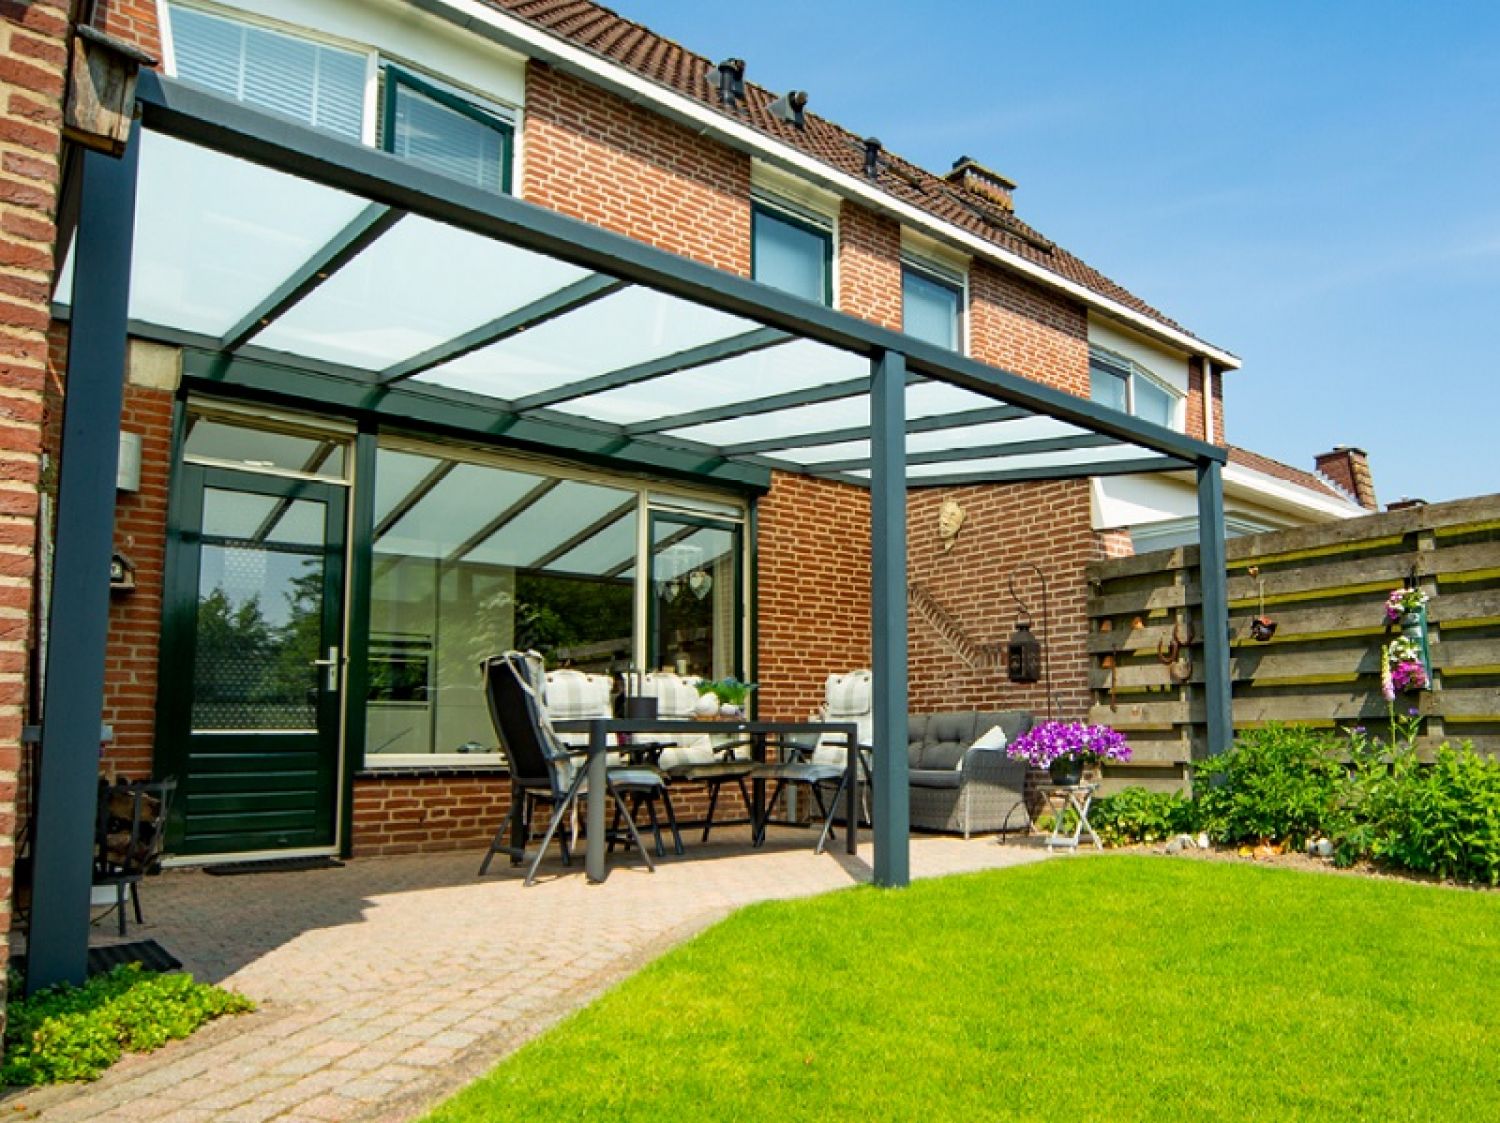 Greenline veranda 500x350 cm - polycarbonaat dak